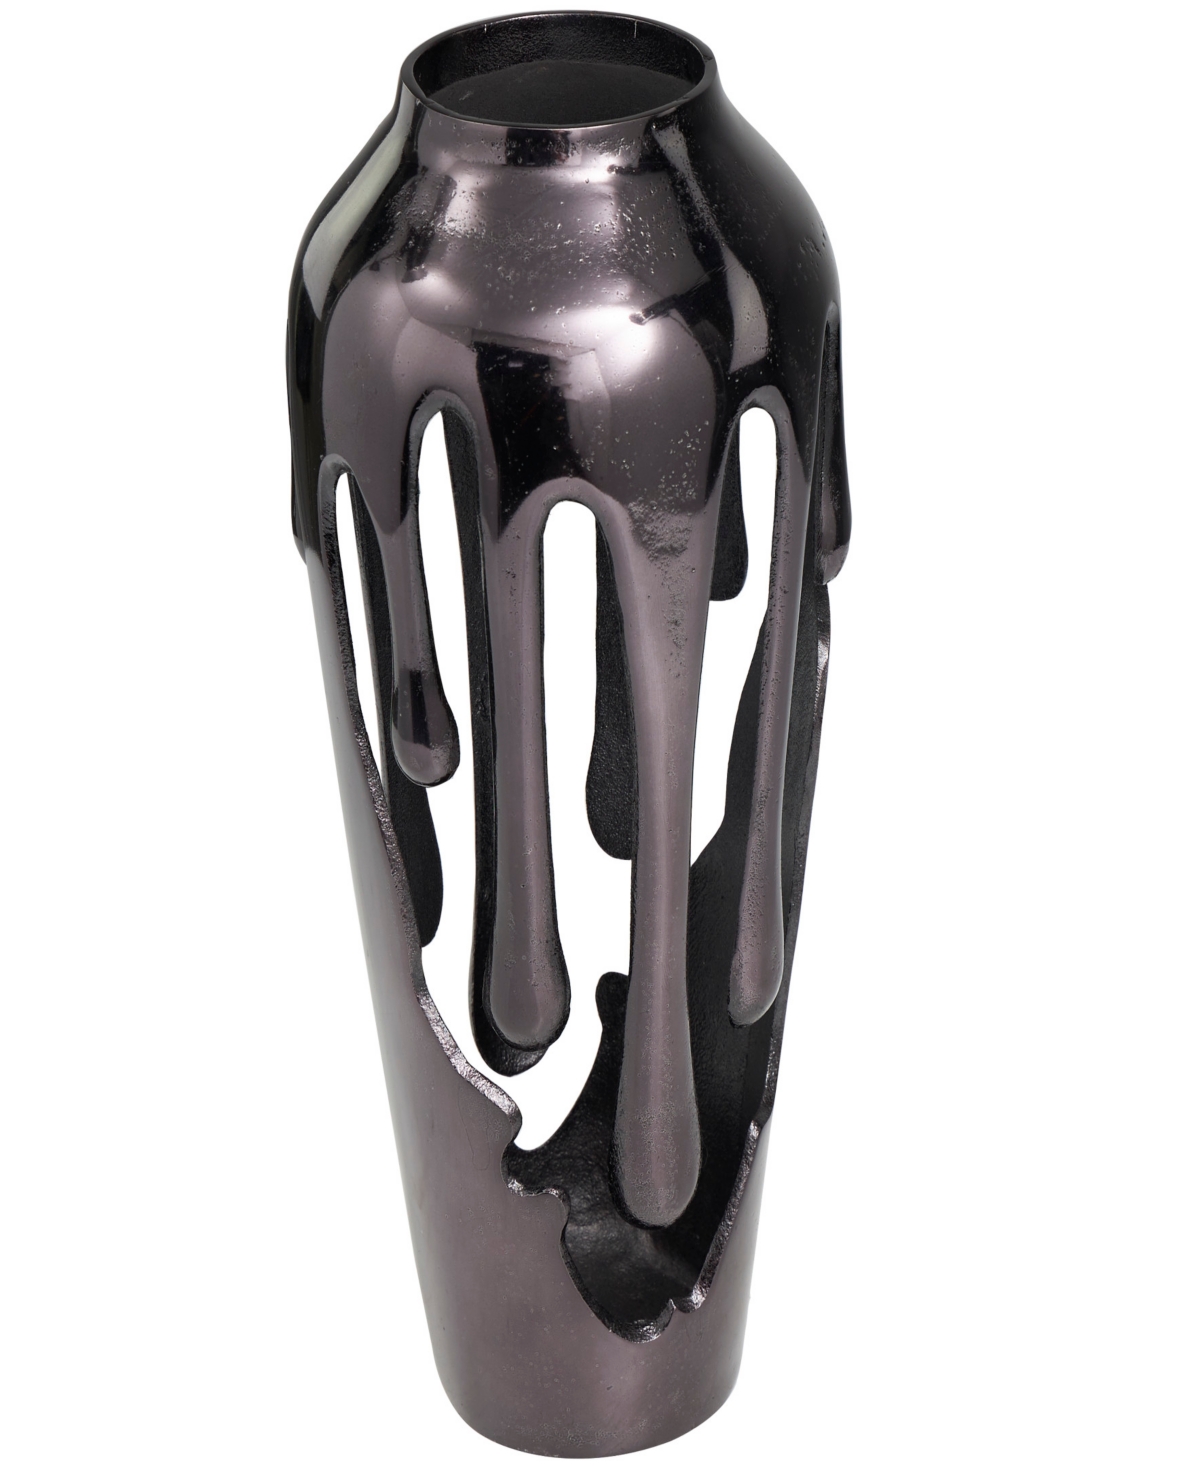 Rosemary Lane Aluminum Drip Vase With Melting Designed Body, 7" X 7" X 15" In Black